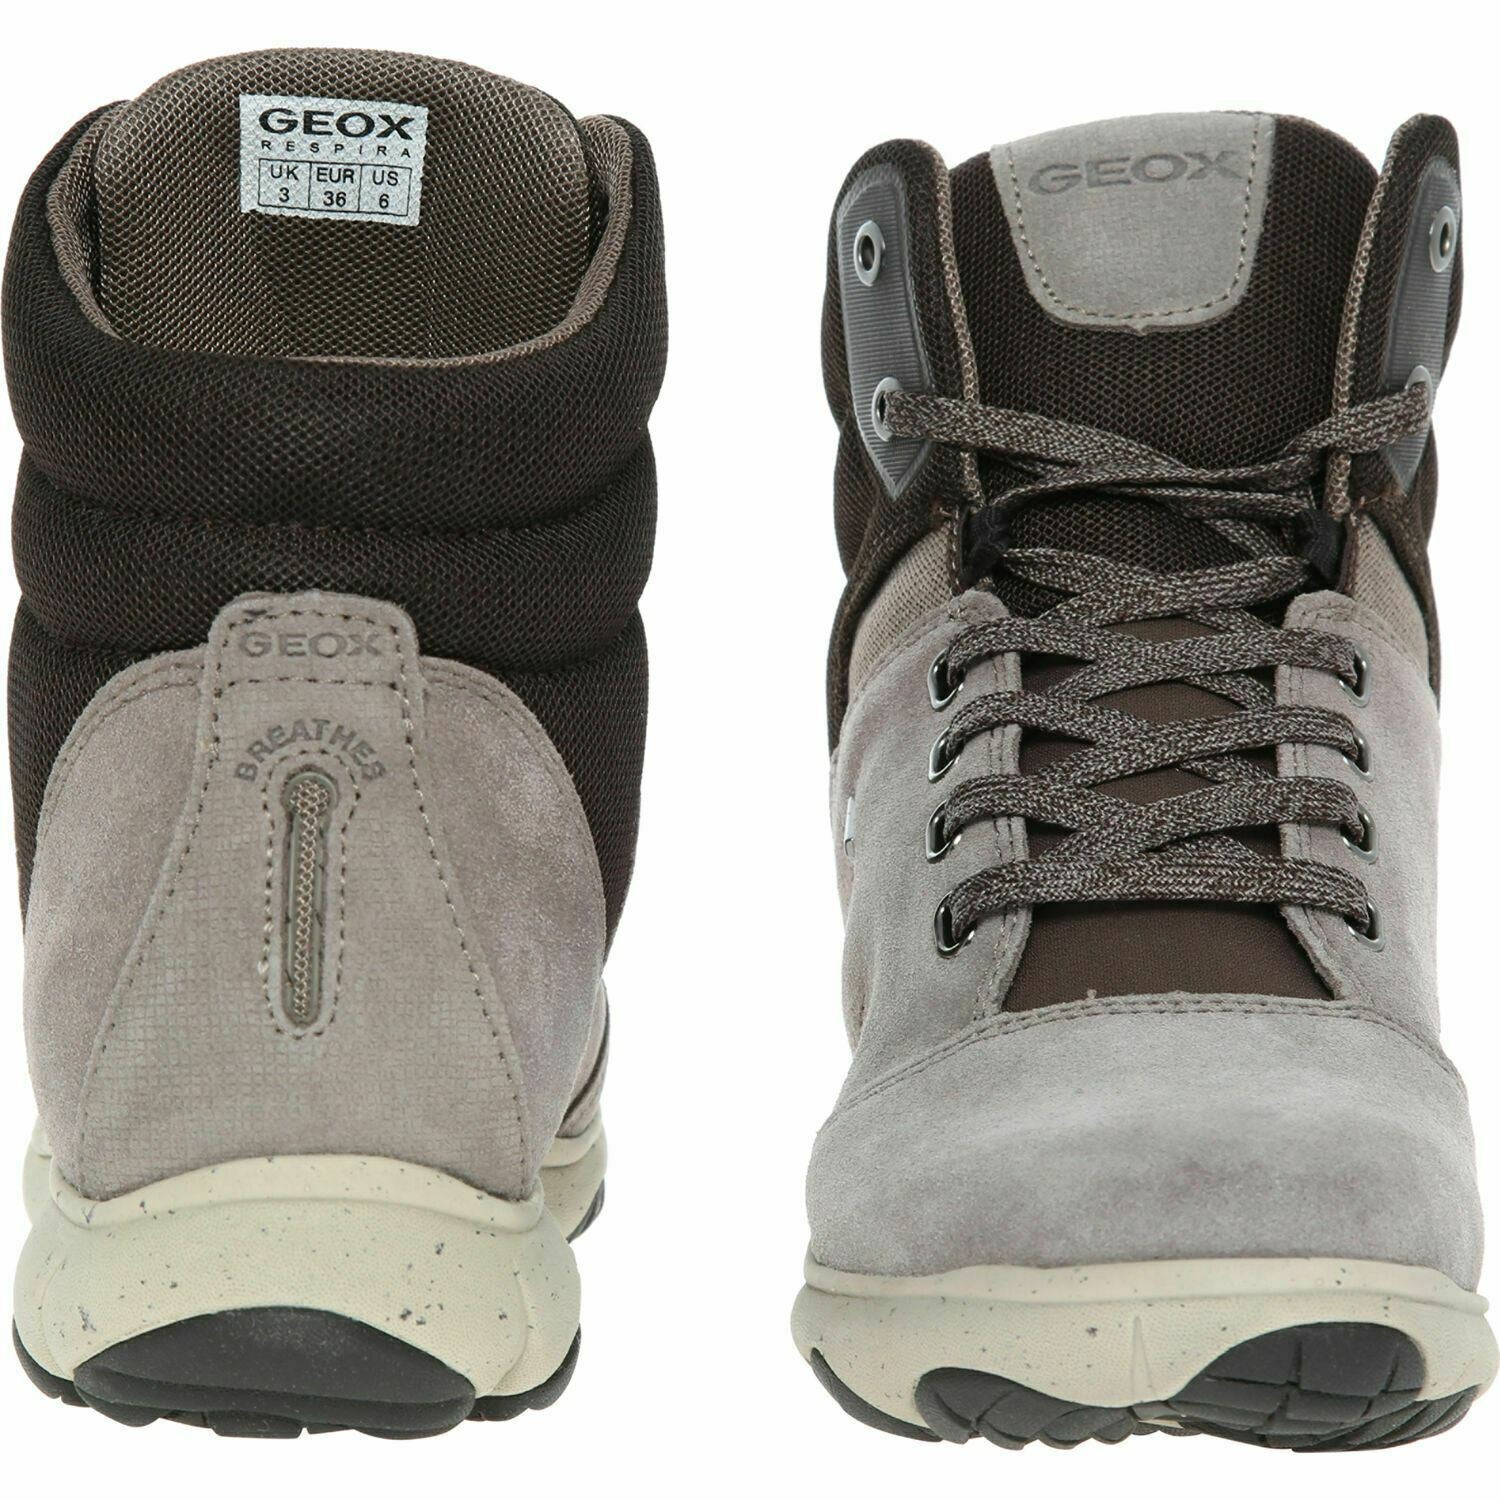 GEOX Ambhibiox Women's NEBULA Taupe Suede Ankle Boots, size UK 3 / EU 36